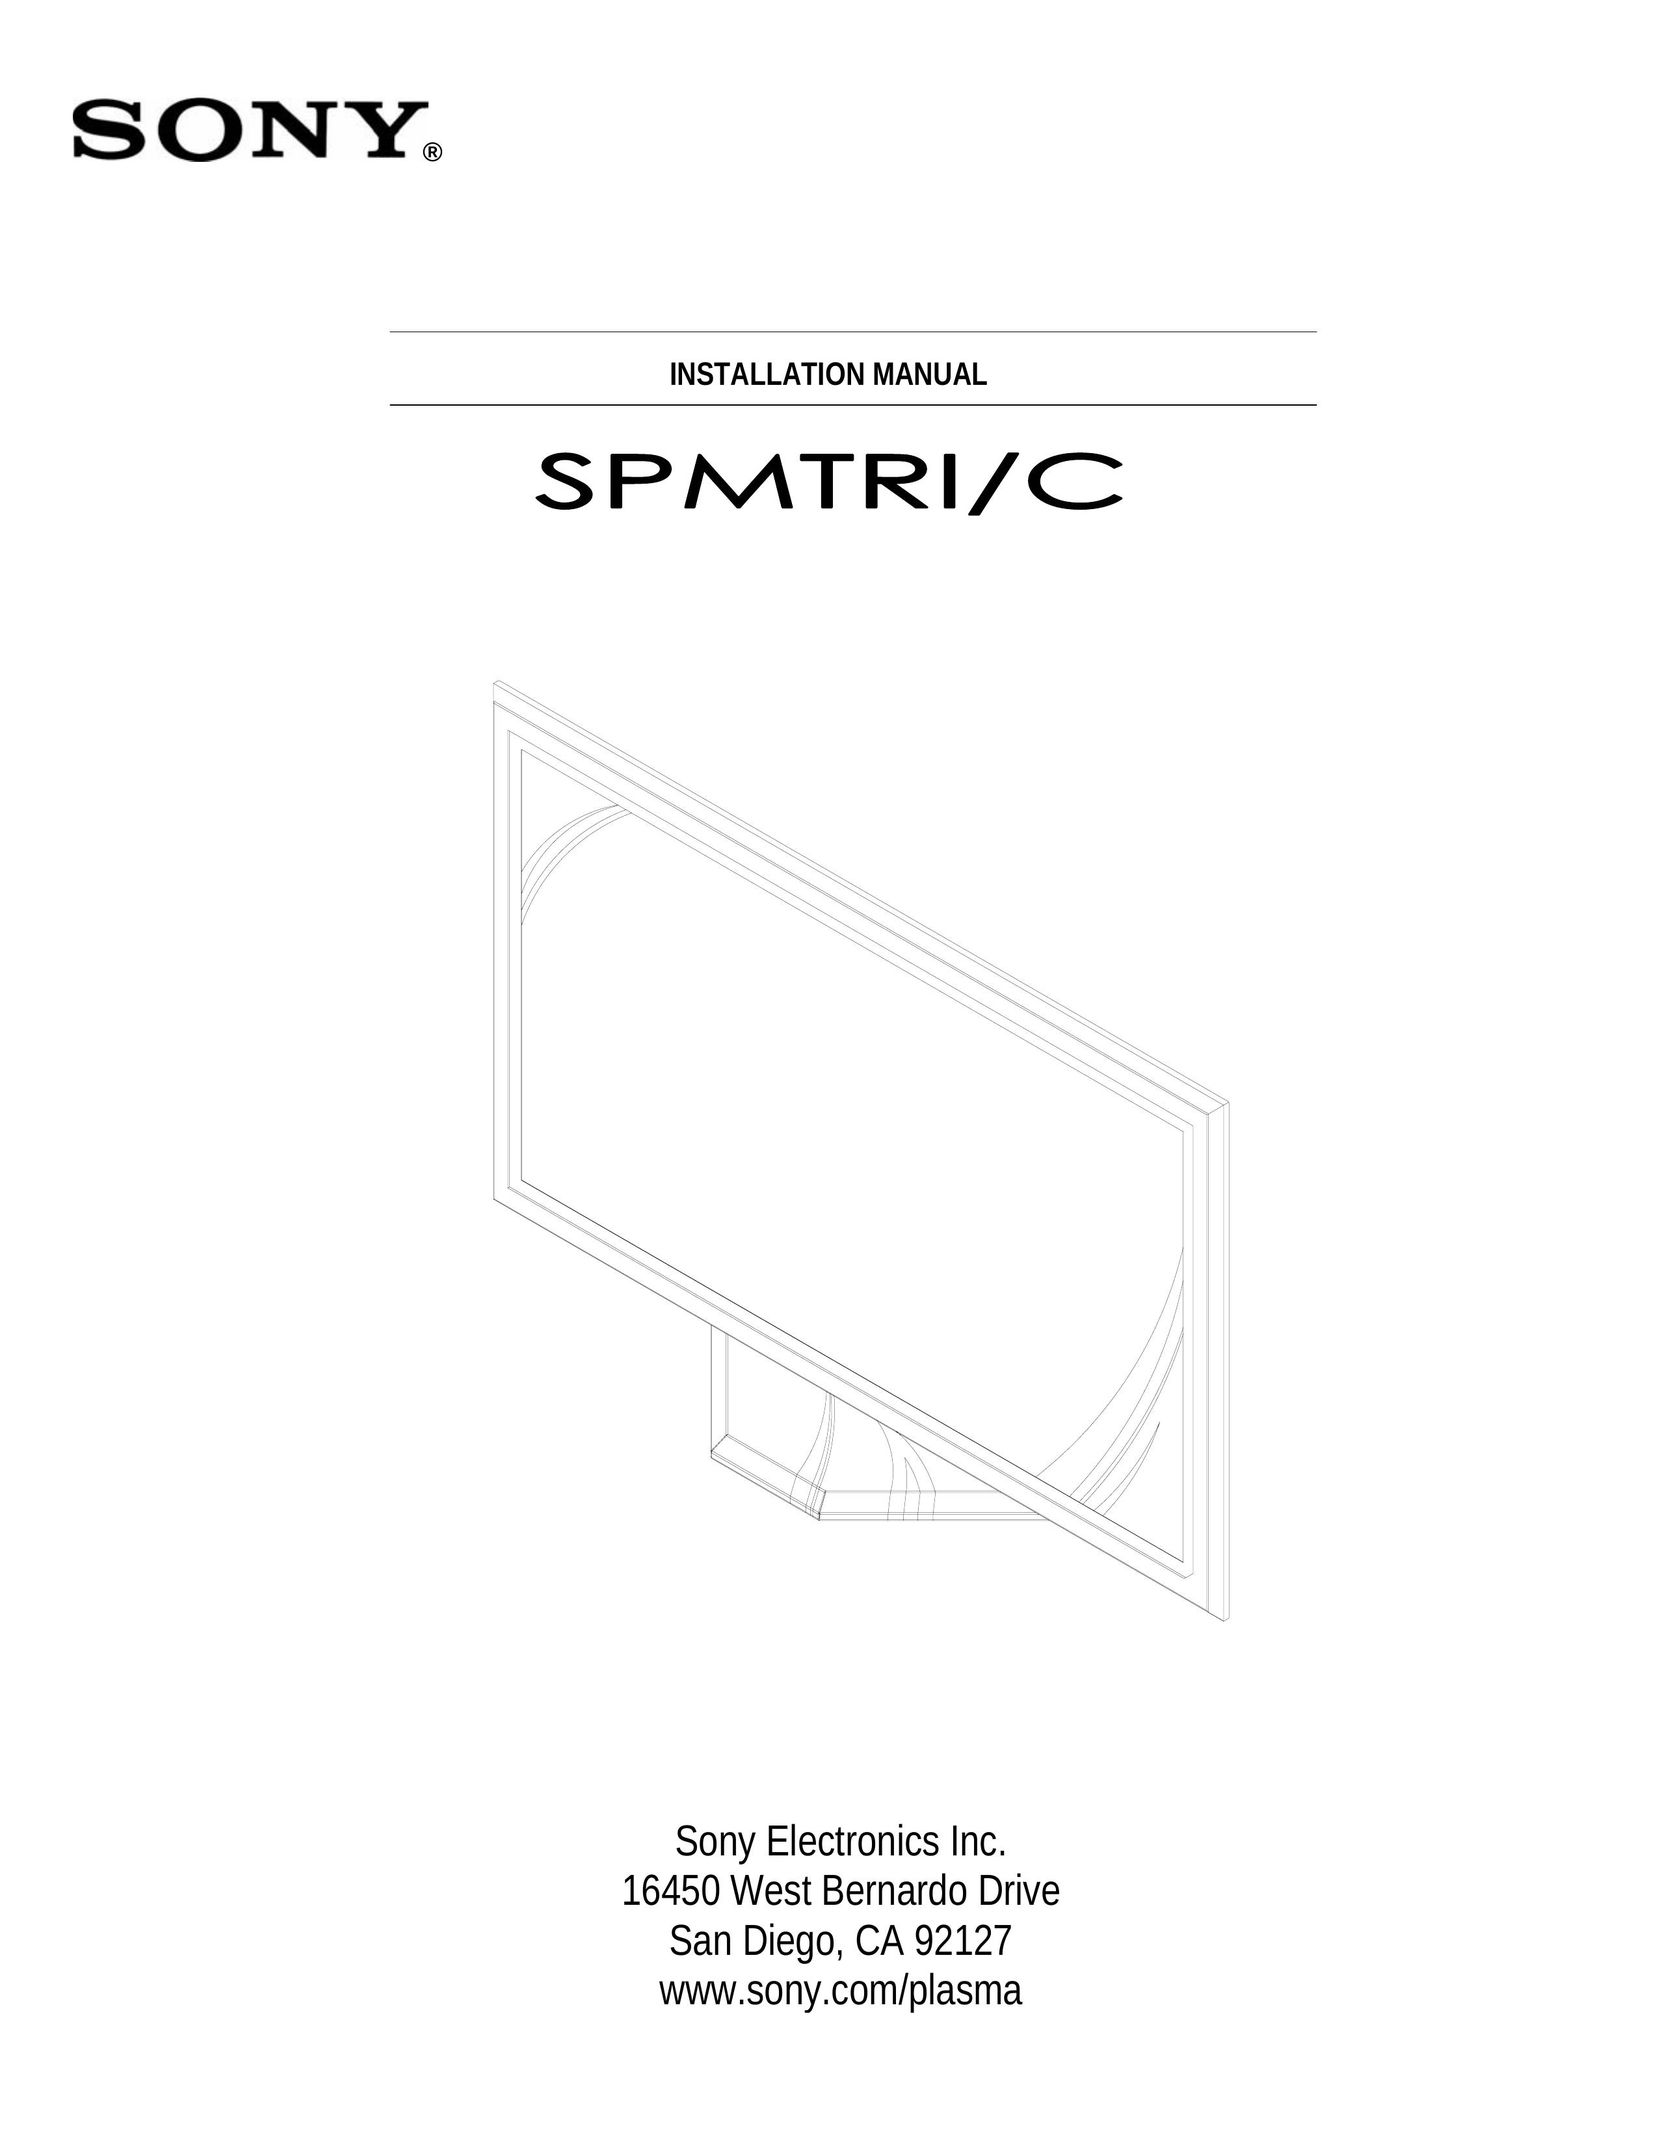 Sony SPM-TRI/C Indoor Furnishings User Manual